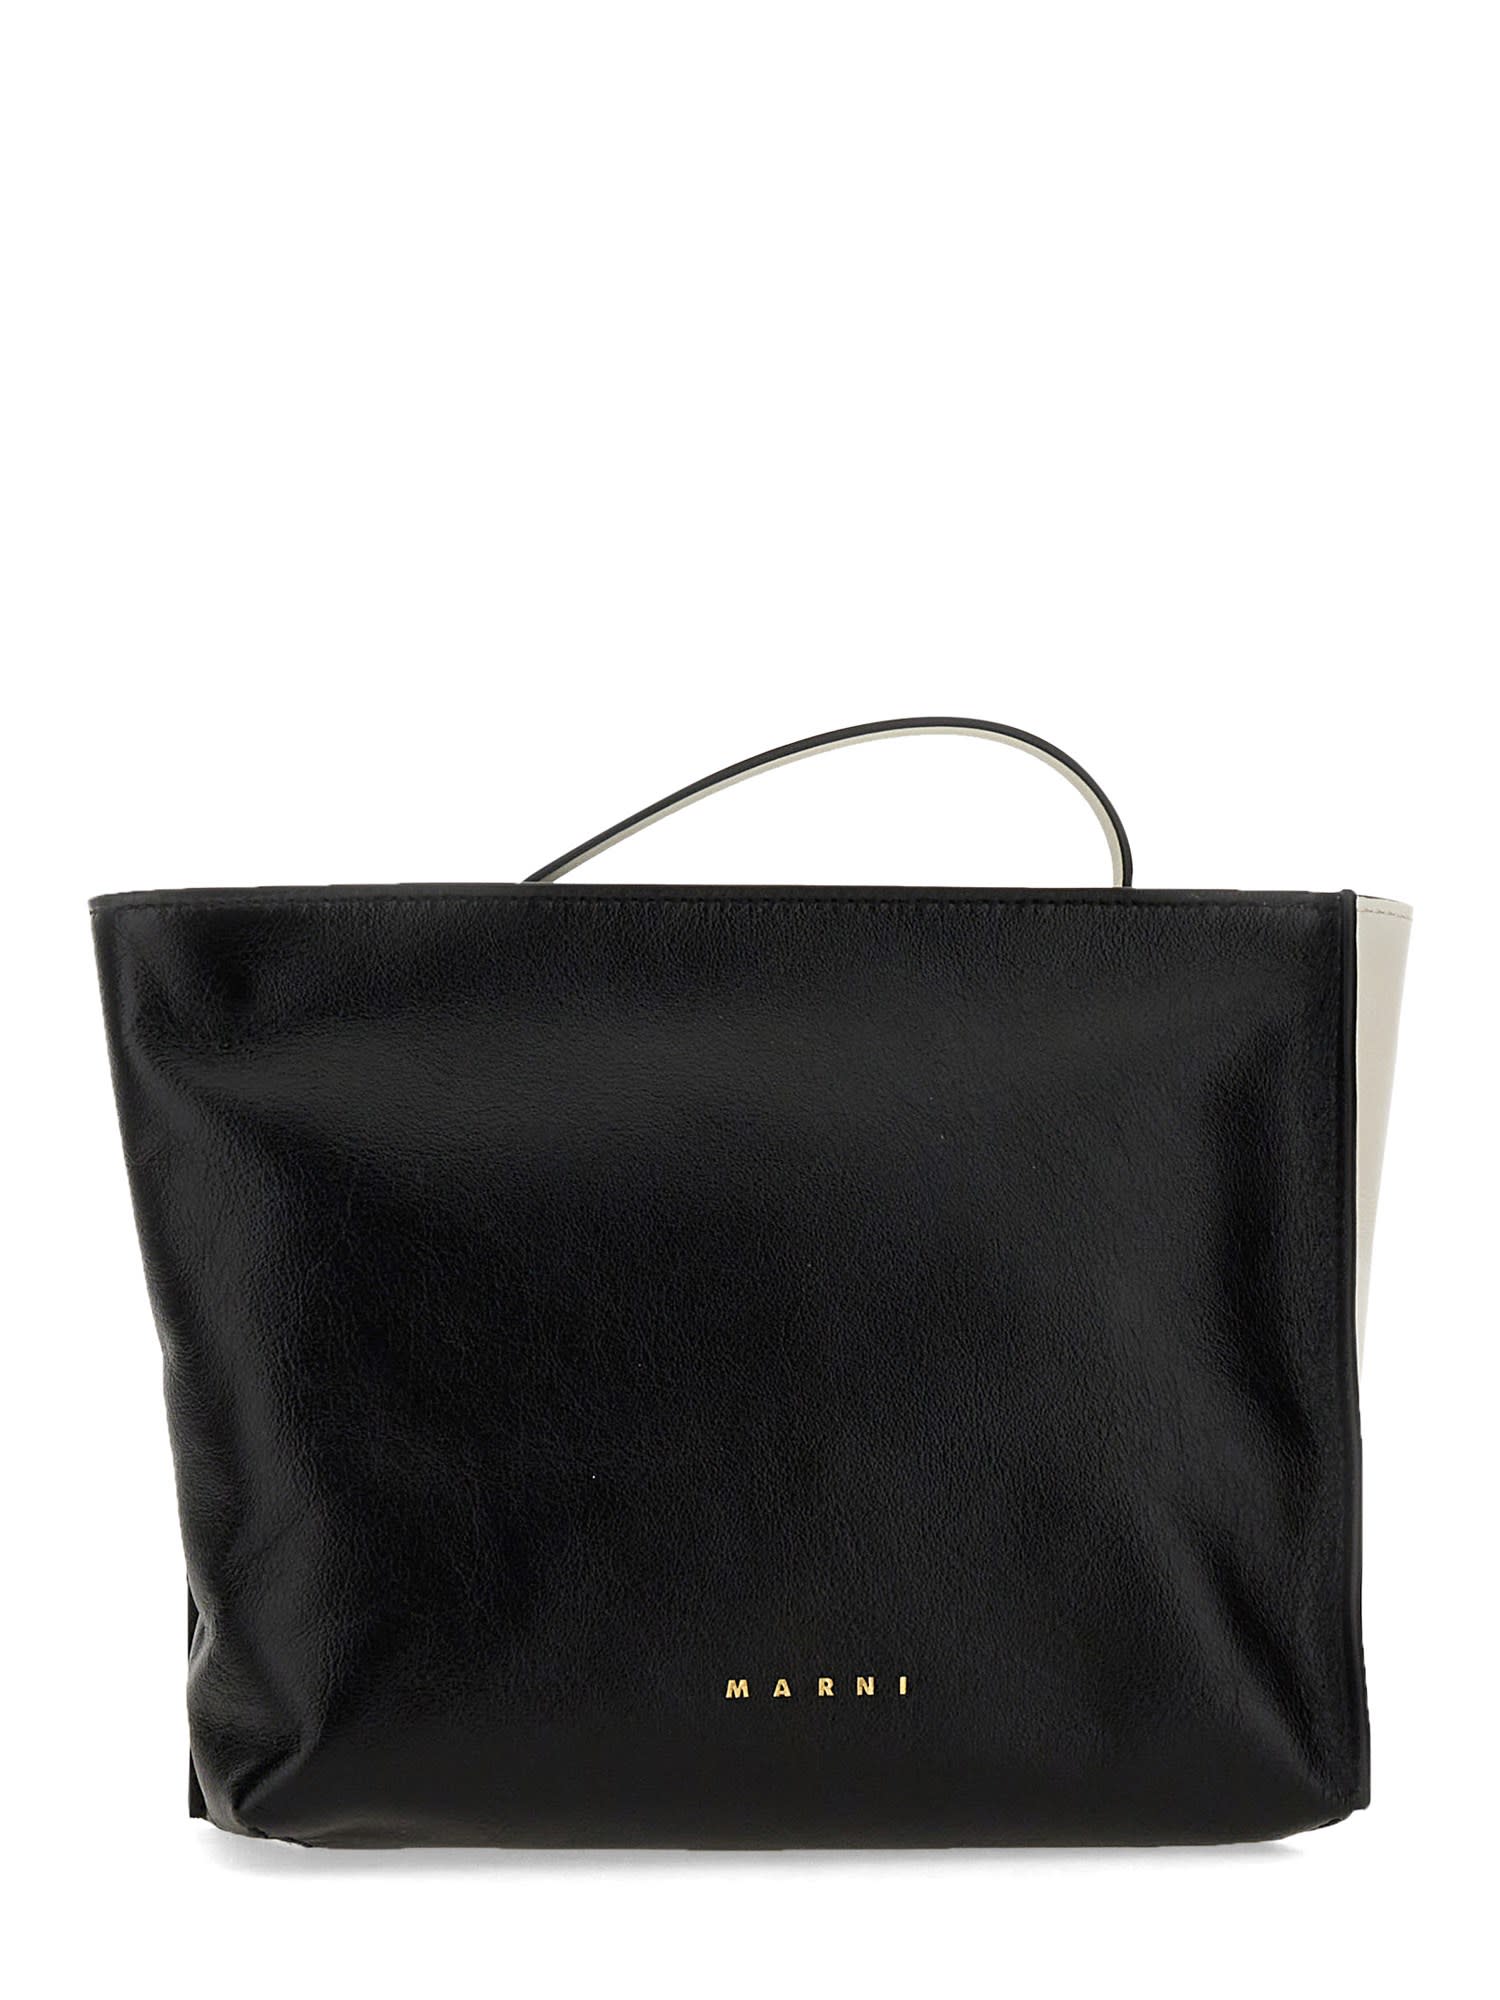 Marni Soft Museum Clutch Bag